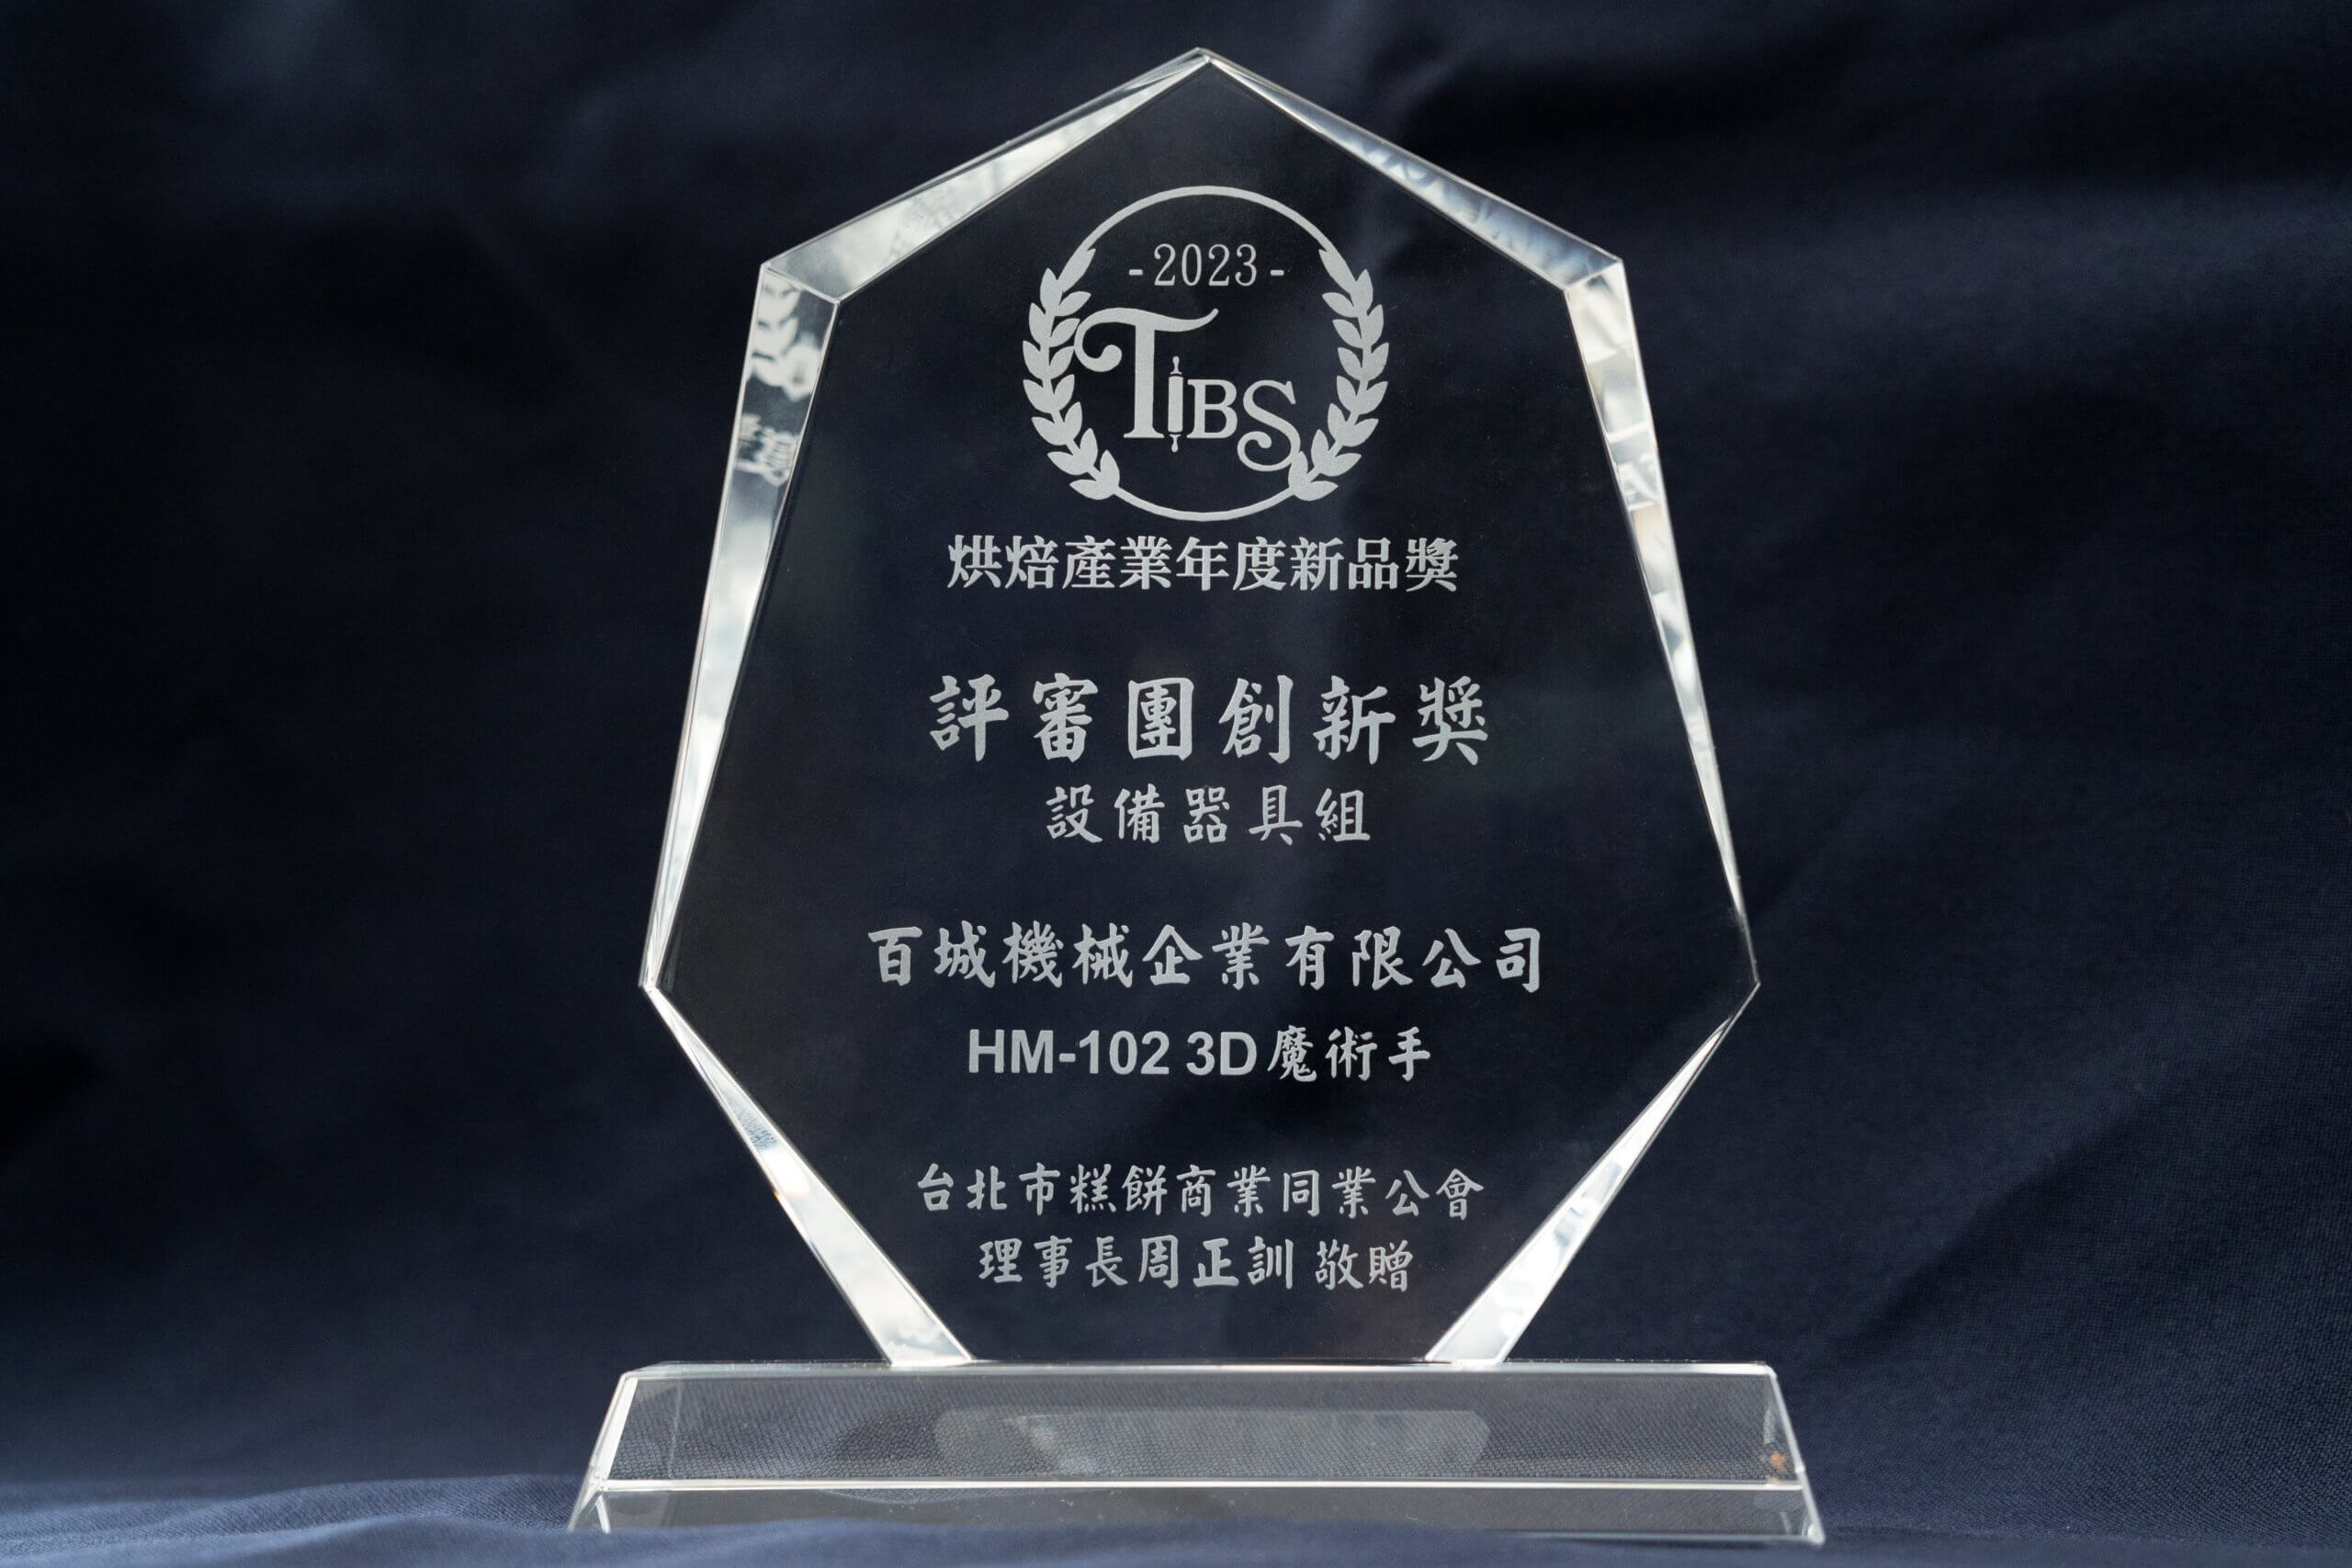 2023 TIBS Baking Industry Annual New Product Award Special Jury Award